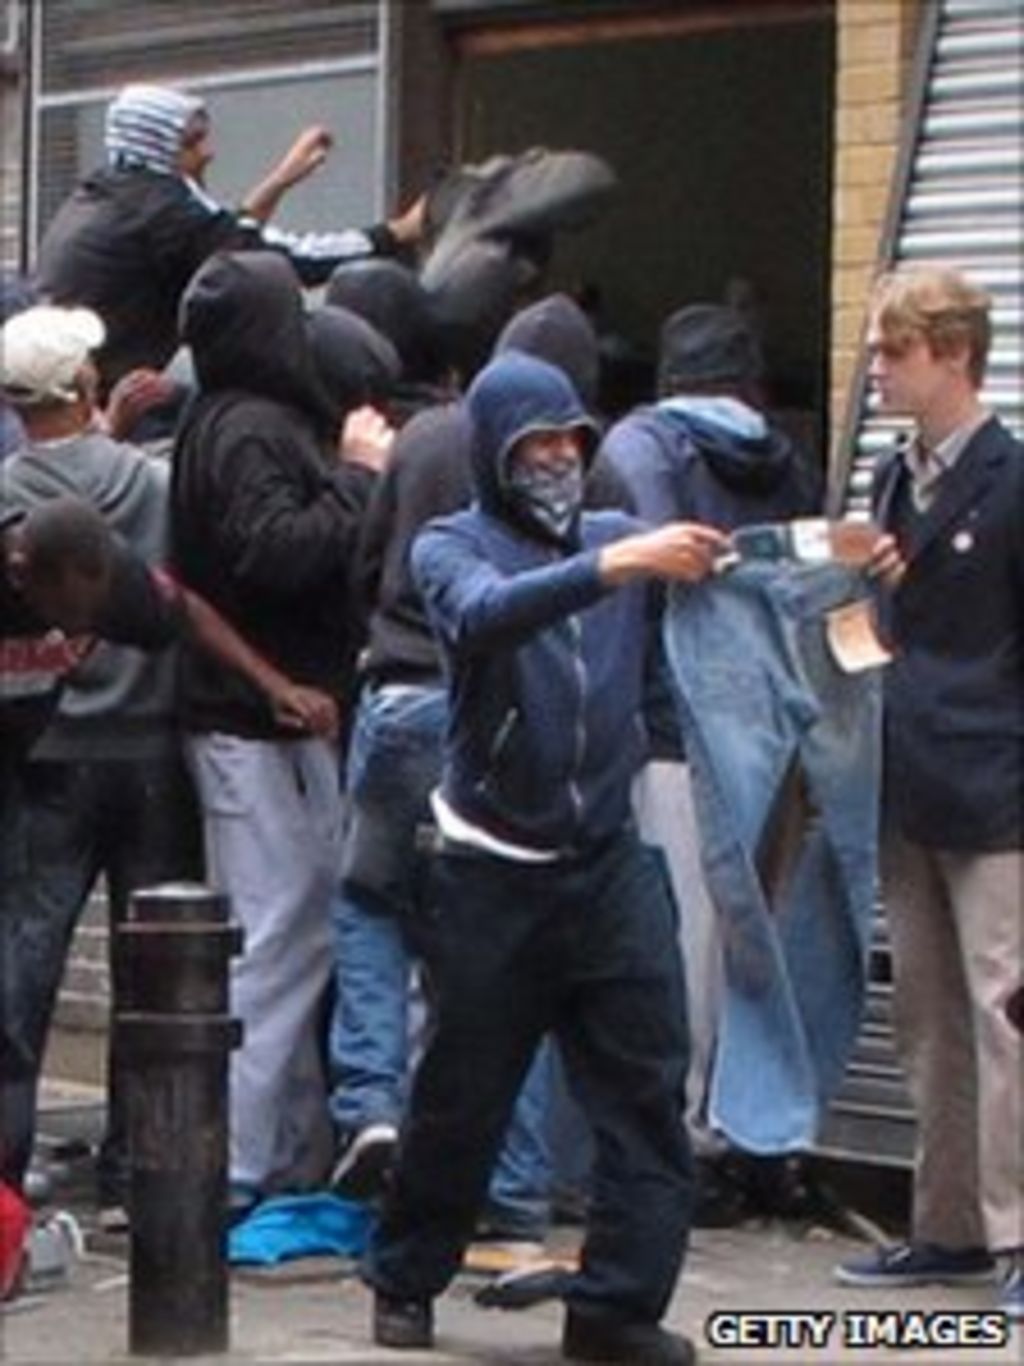 England riots: When is it right to turn vigilante? - BBC News